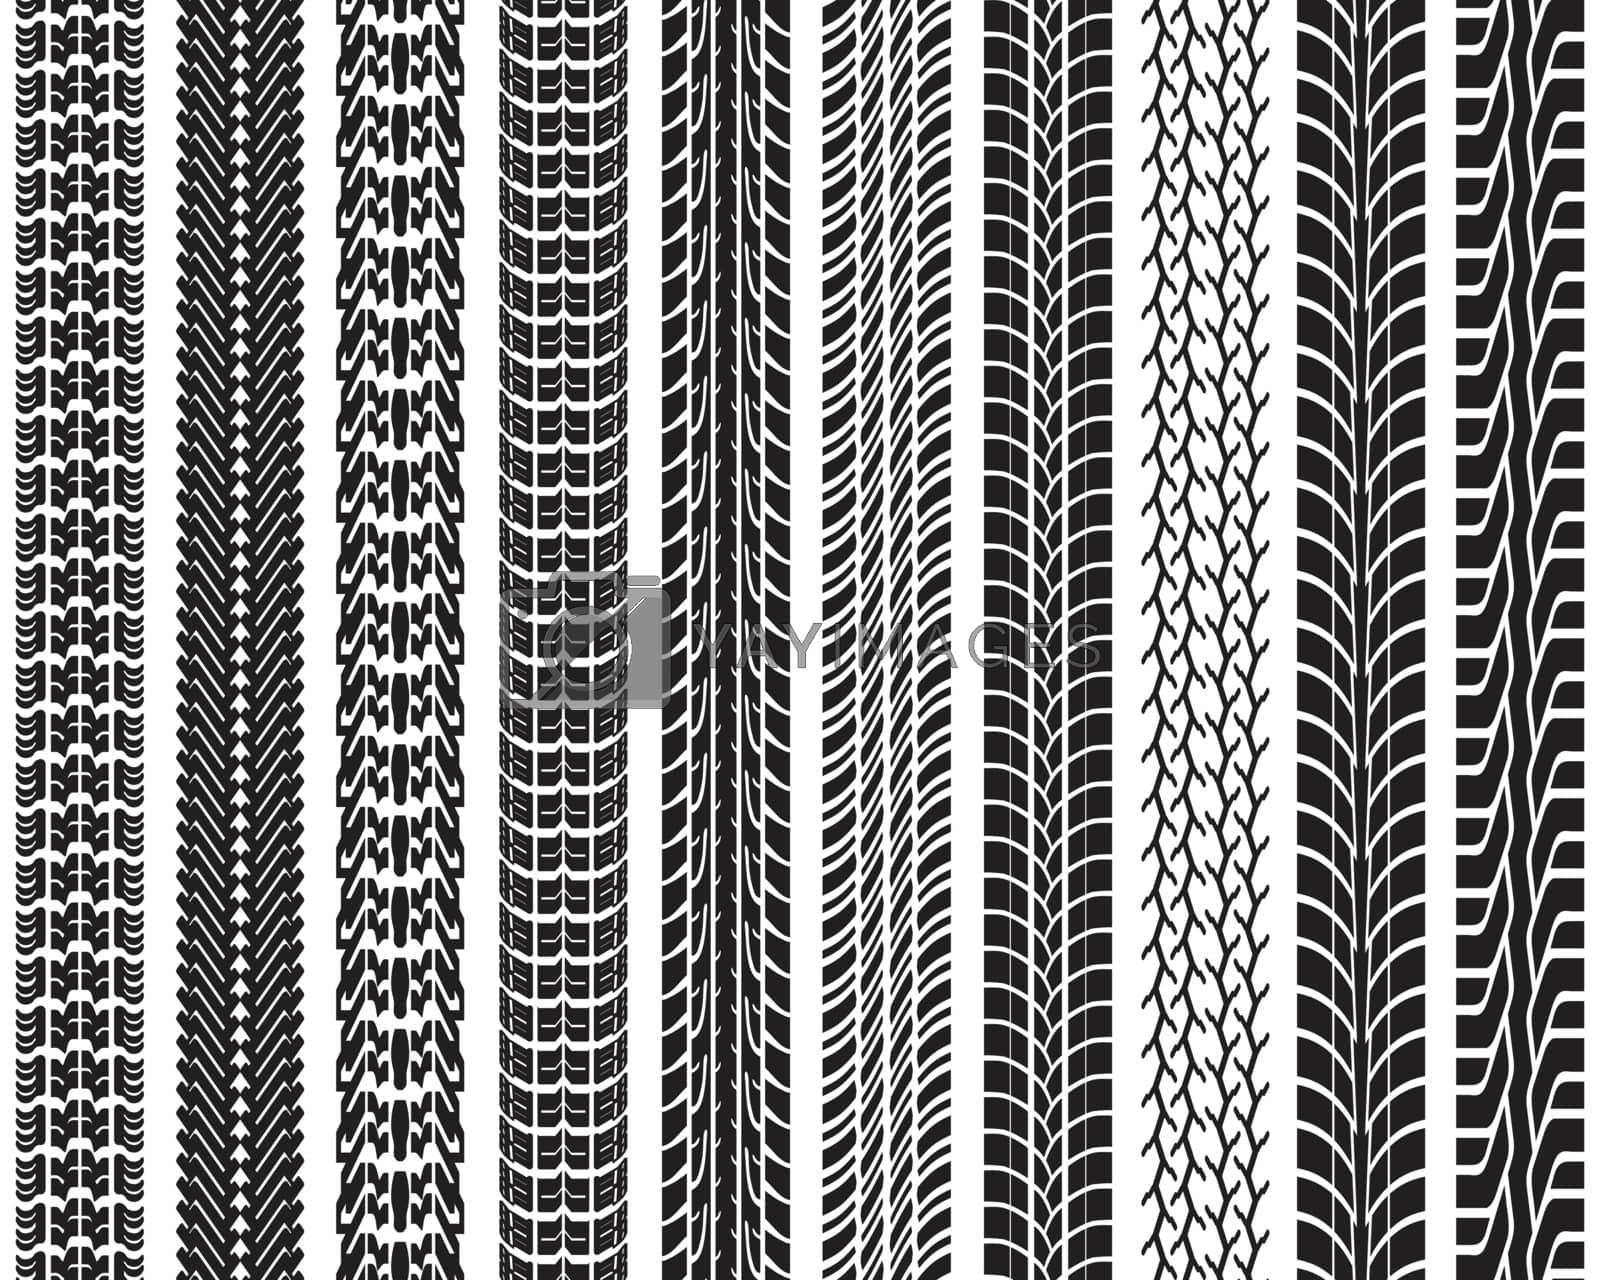 Royalty free image of tire prints illustration by ratkomat